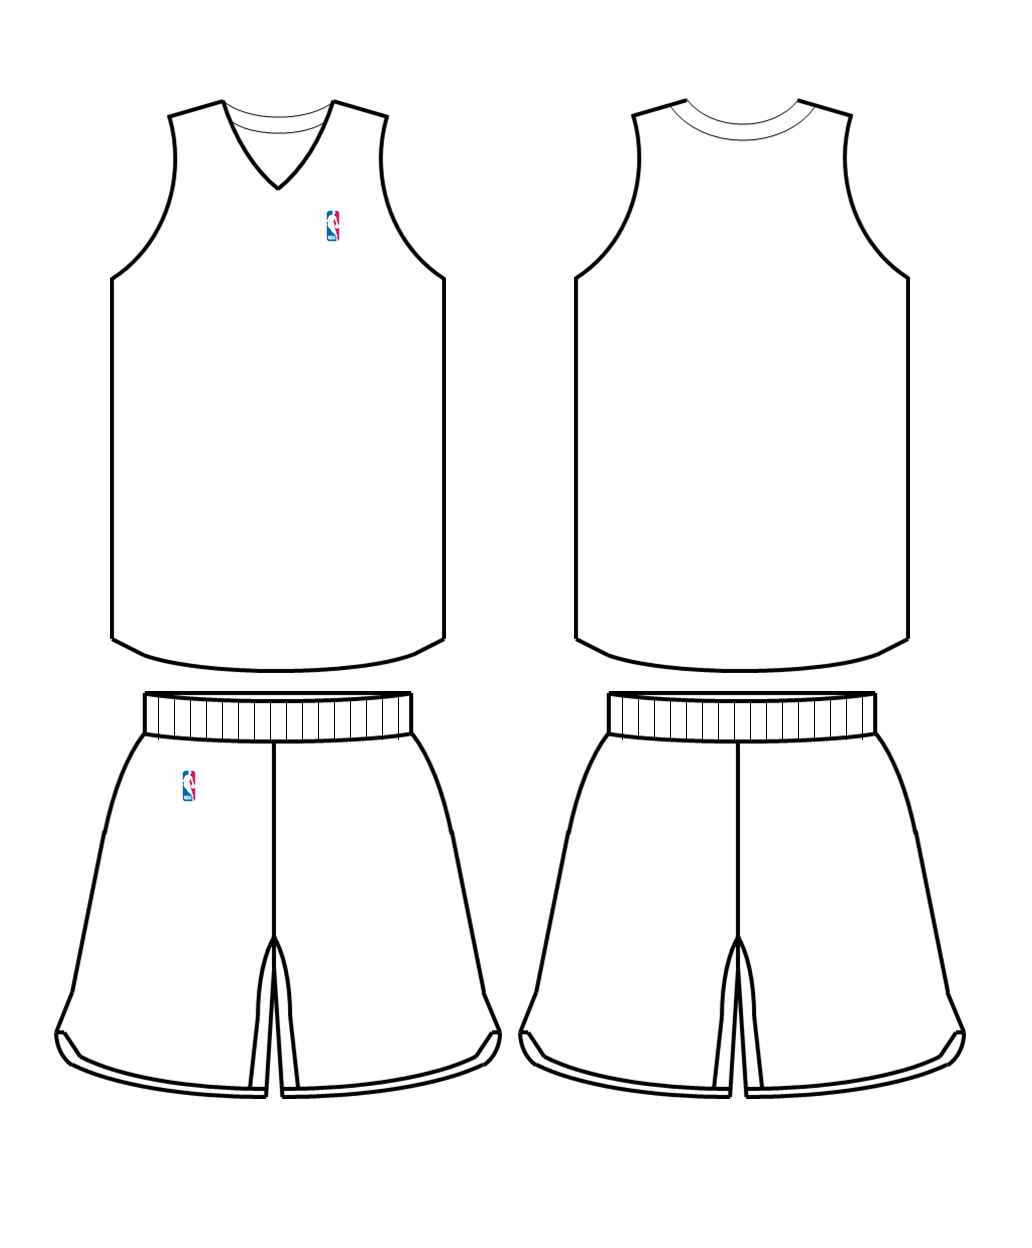 File:NBA Uniform template.png - Wikimedia Commons